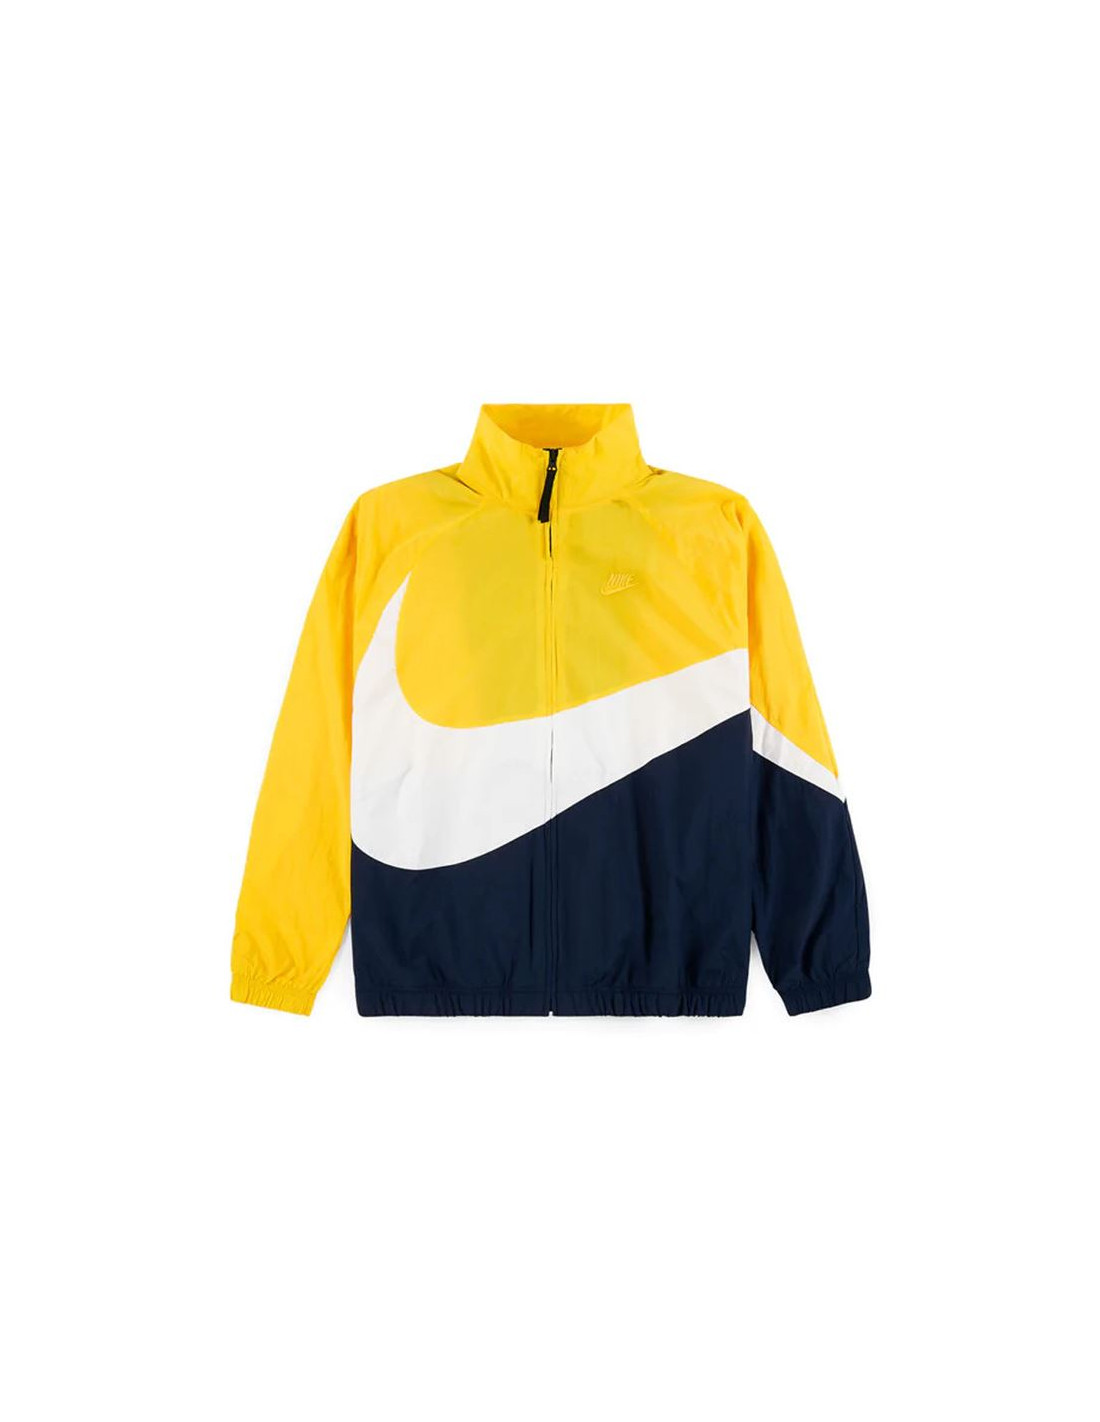 Chaqueta nike sportswear amarillo/azul